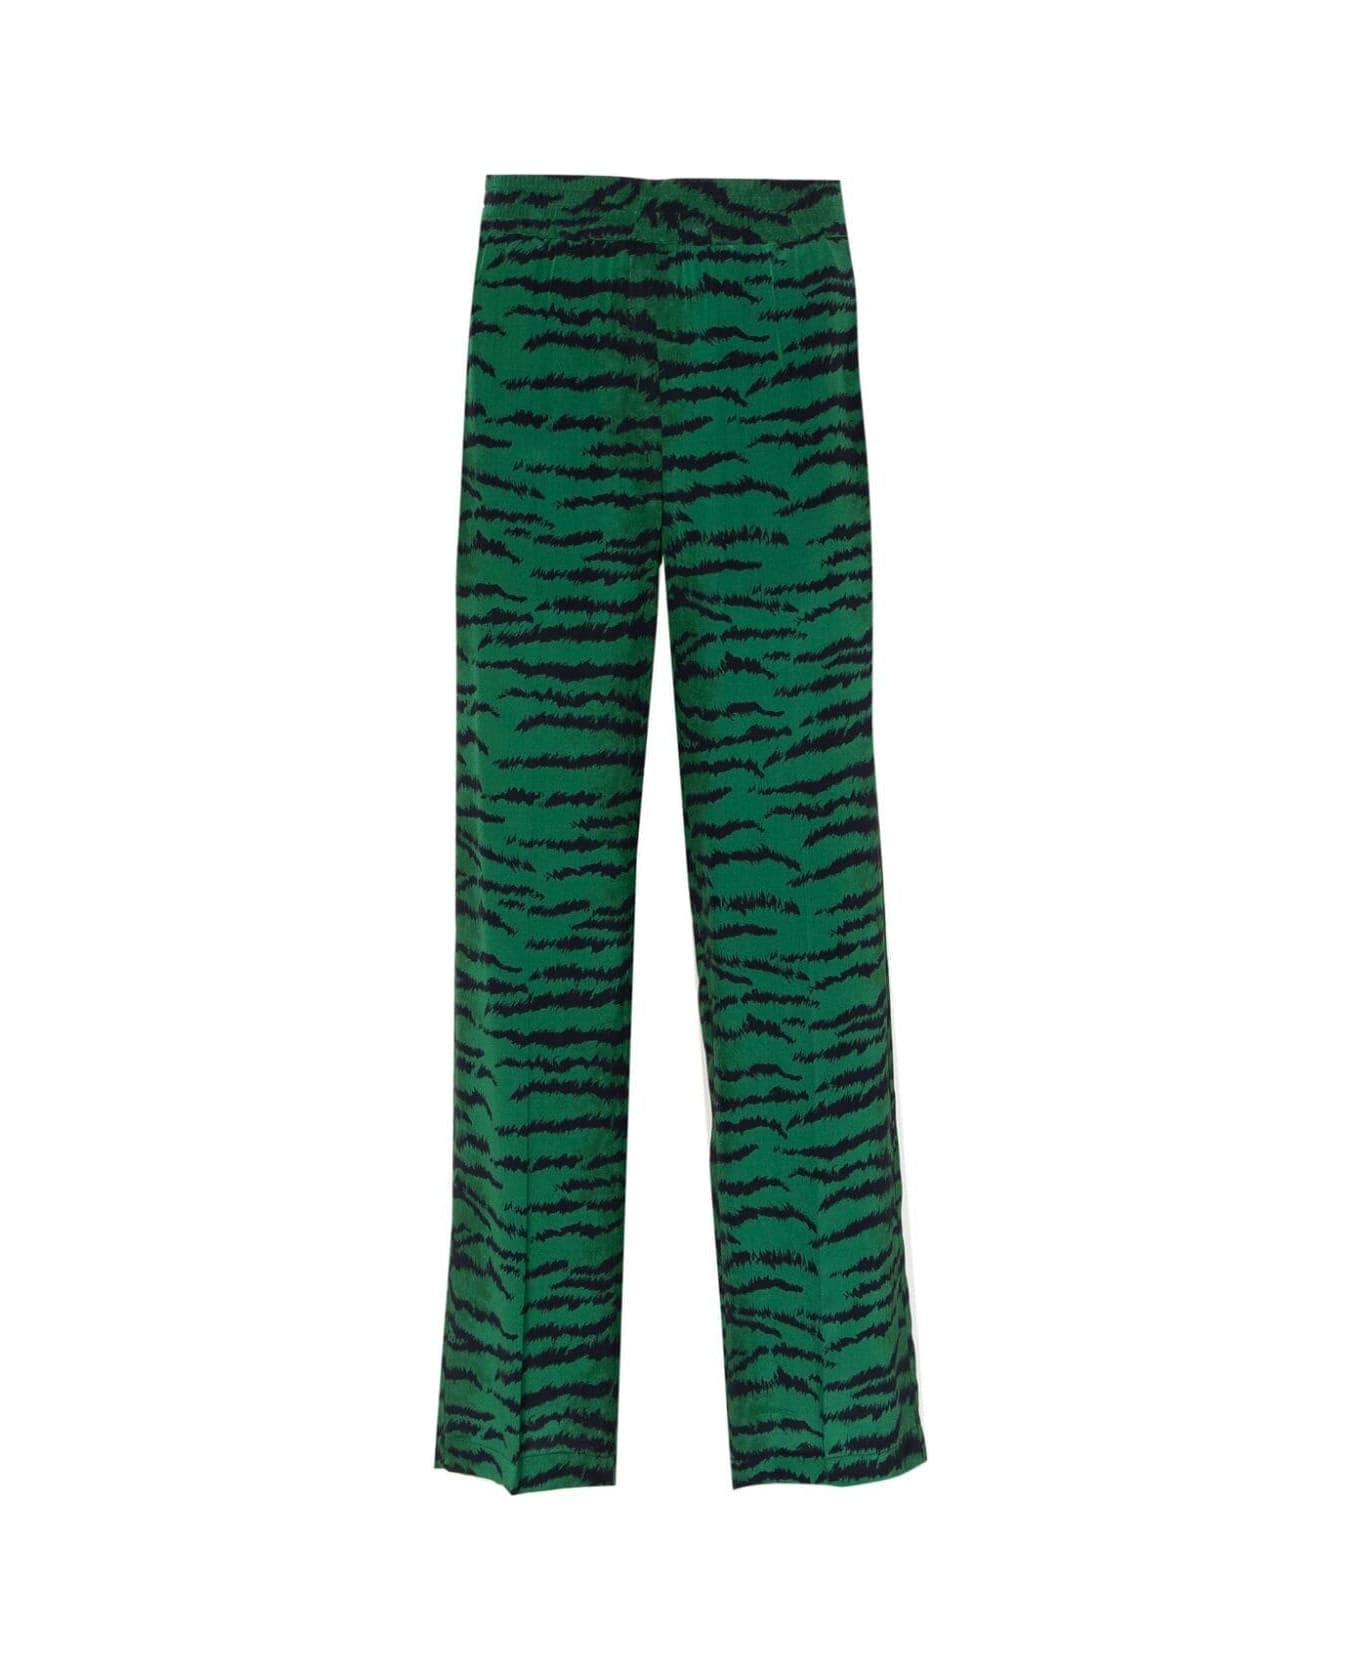 Victoria Beckham Pijama Pants - Green Navy ボトムス